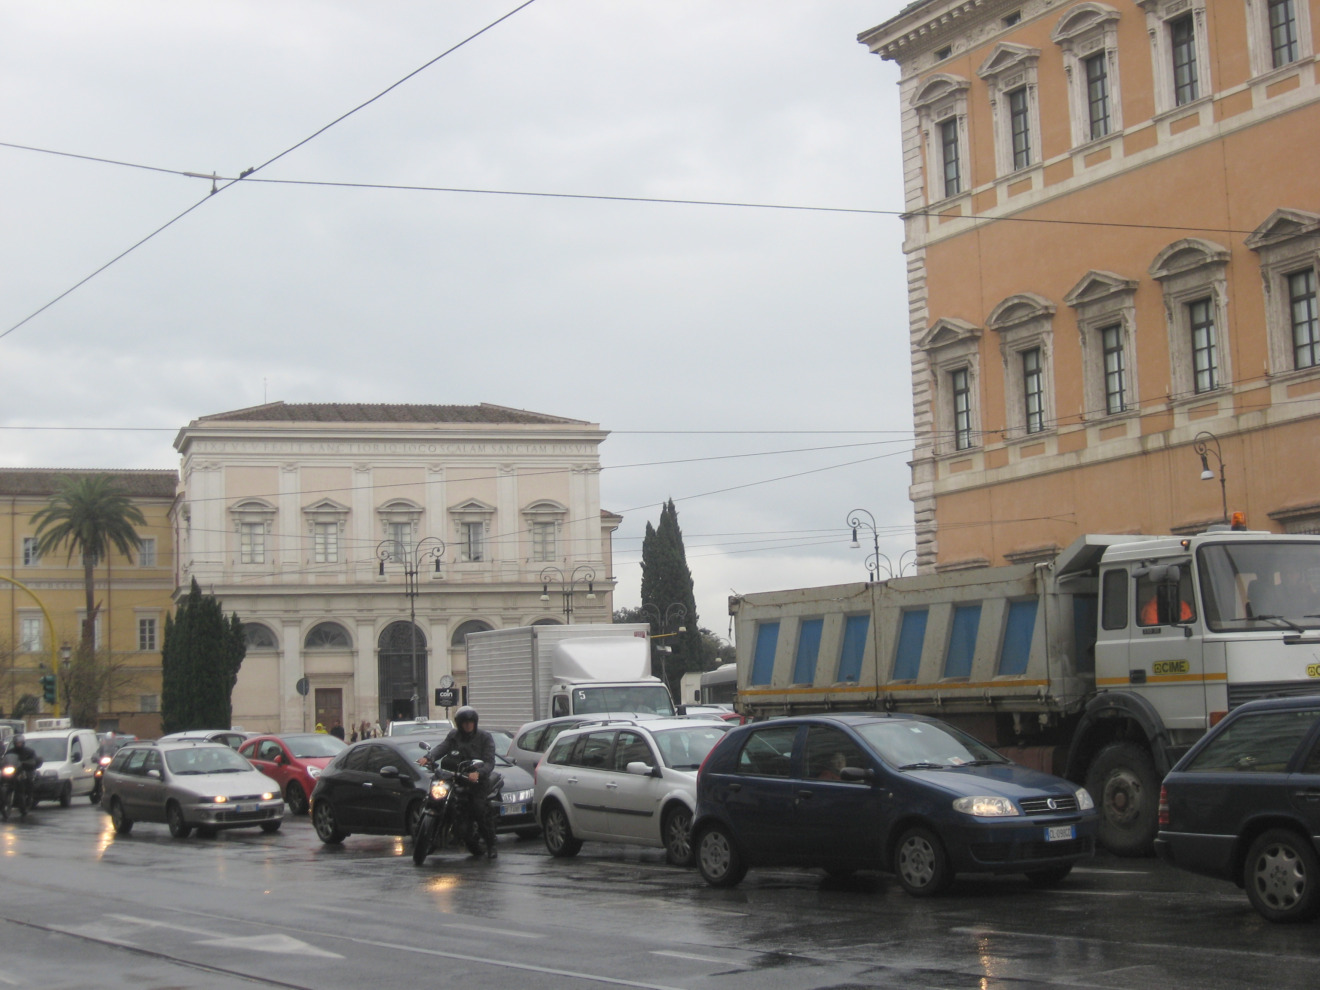 When it rains in Rome…